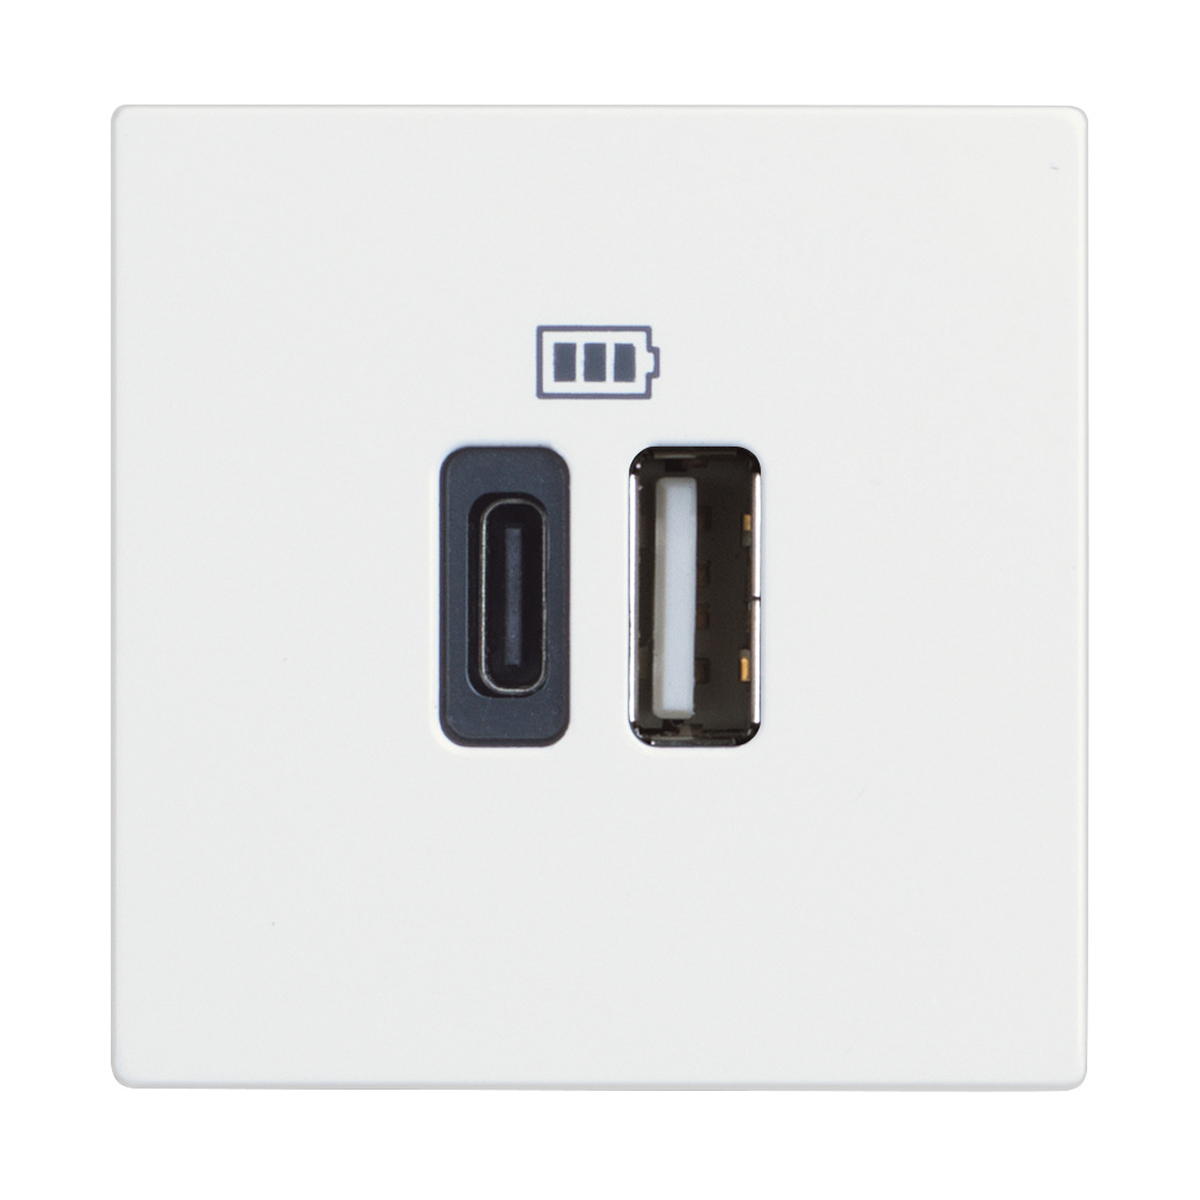 Base cargador doble USB Classia - Tipo A+C - Blanco - 2 módulos, RW4287C2, 8005543632574